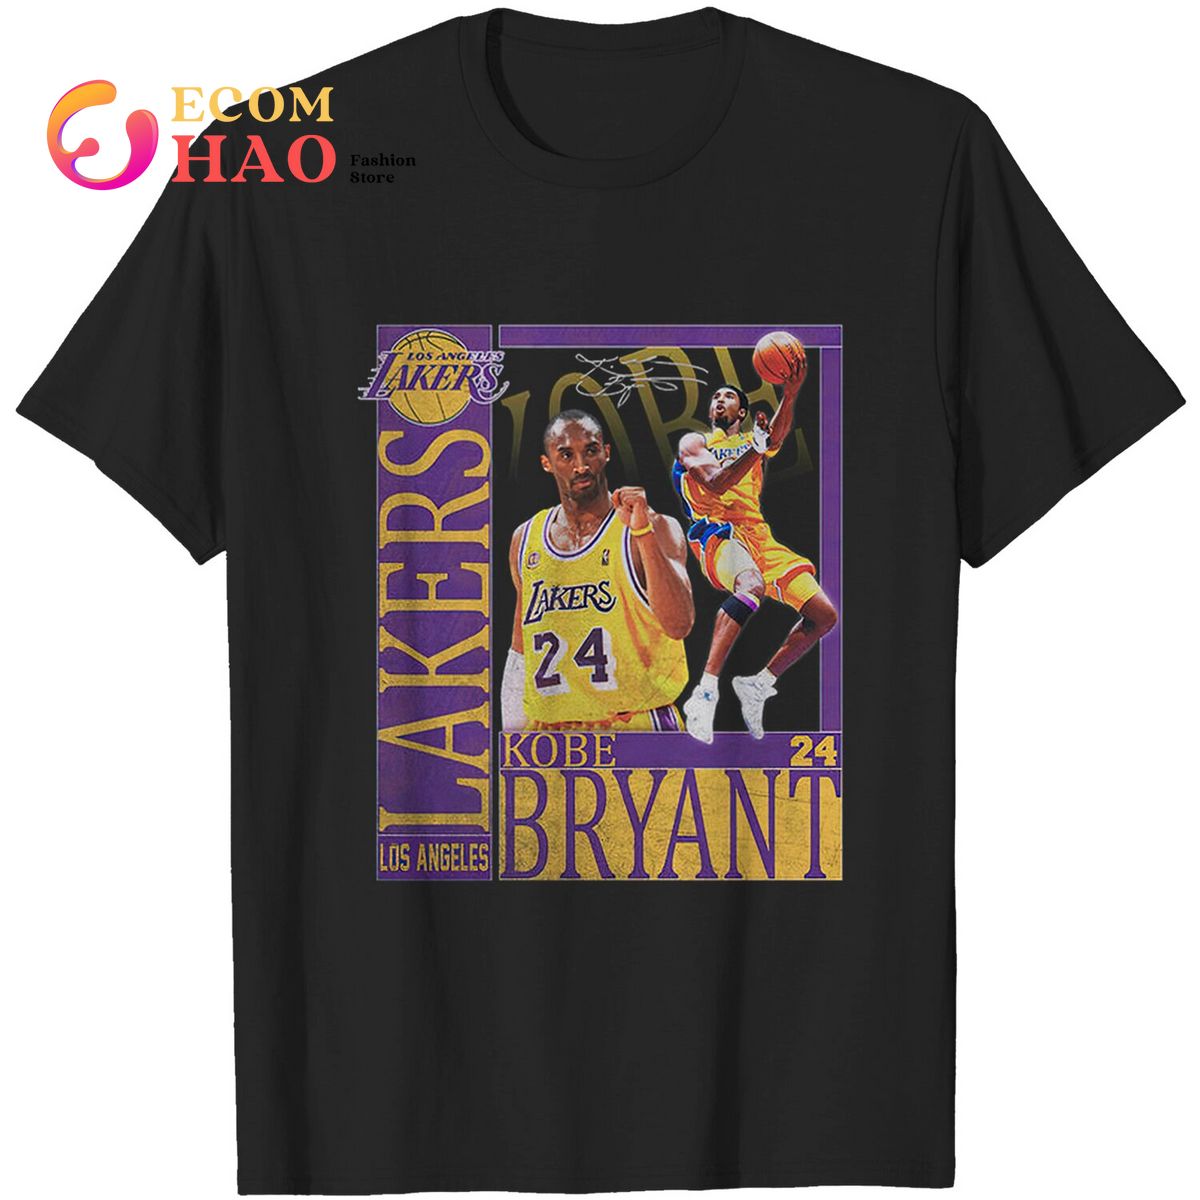 Kobe Bryant Los Angeles Lakers T-shirt - Ecomhao Store